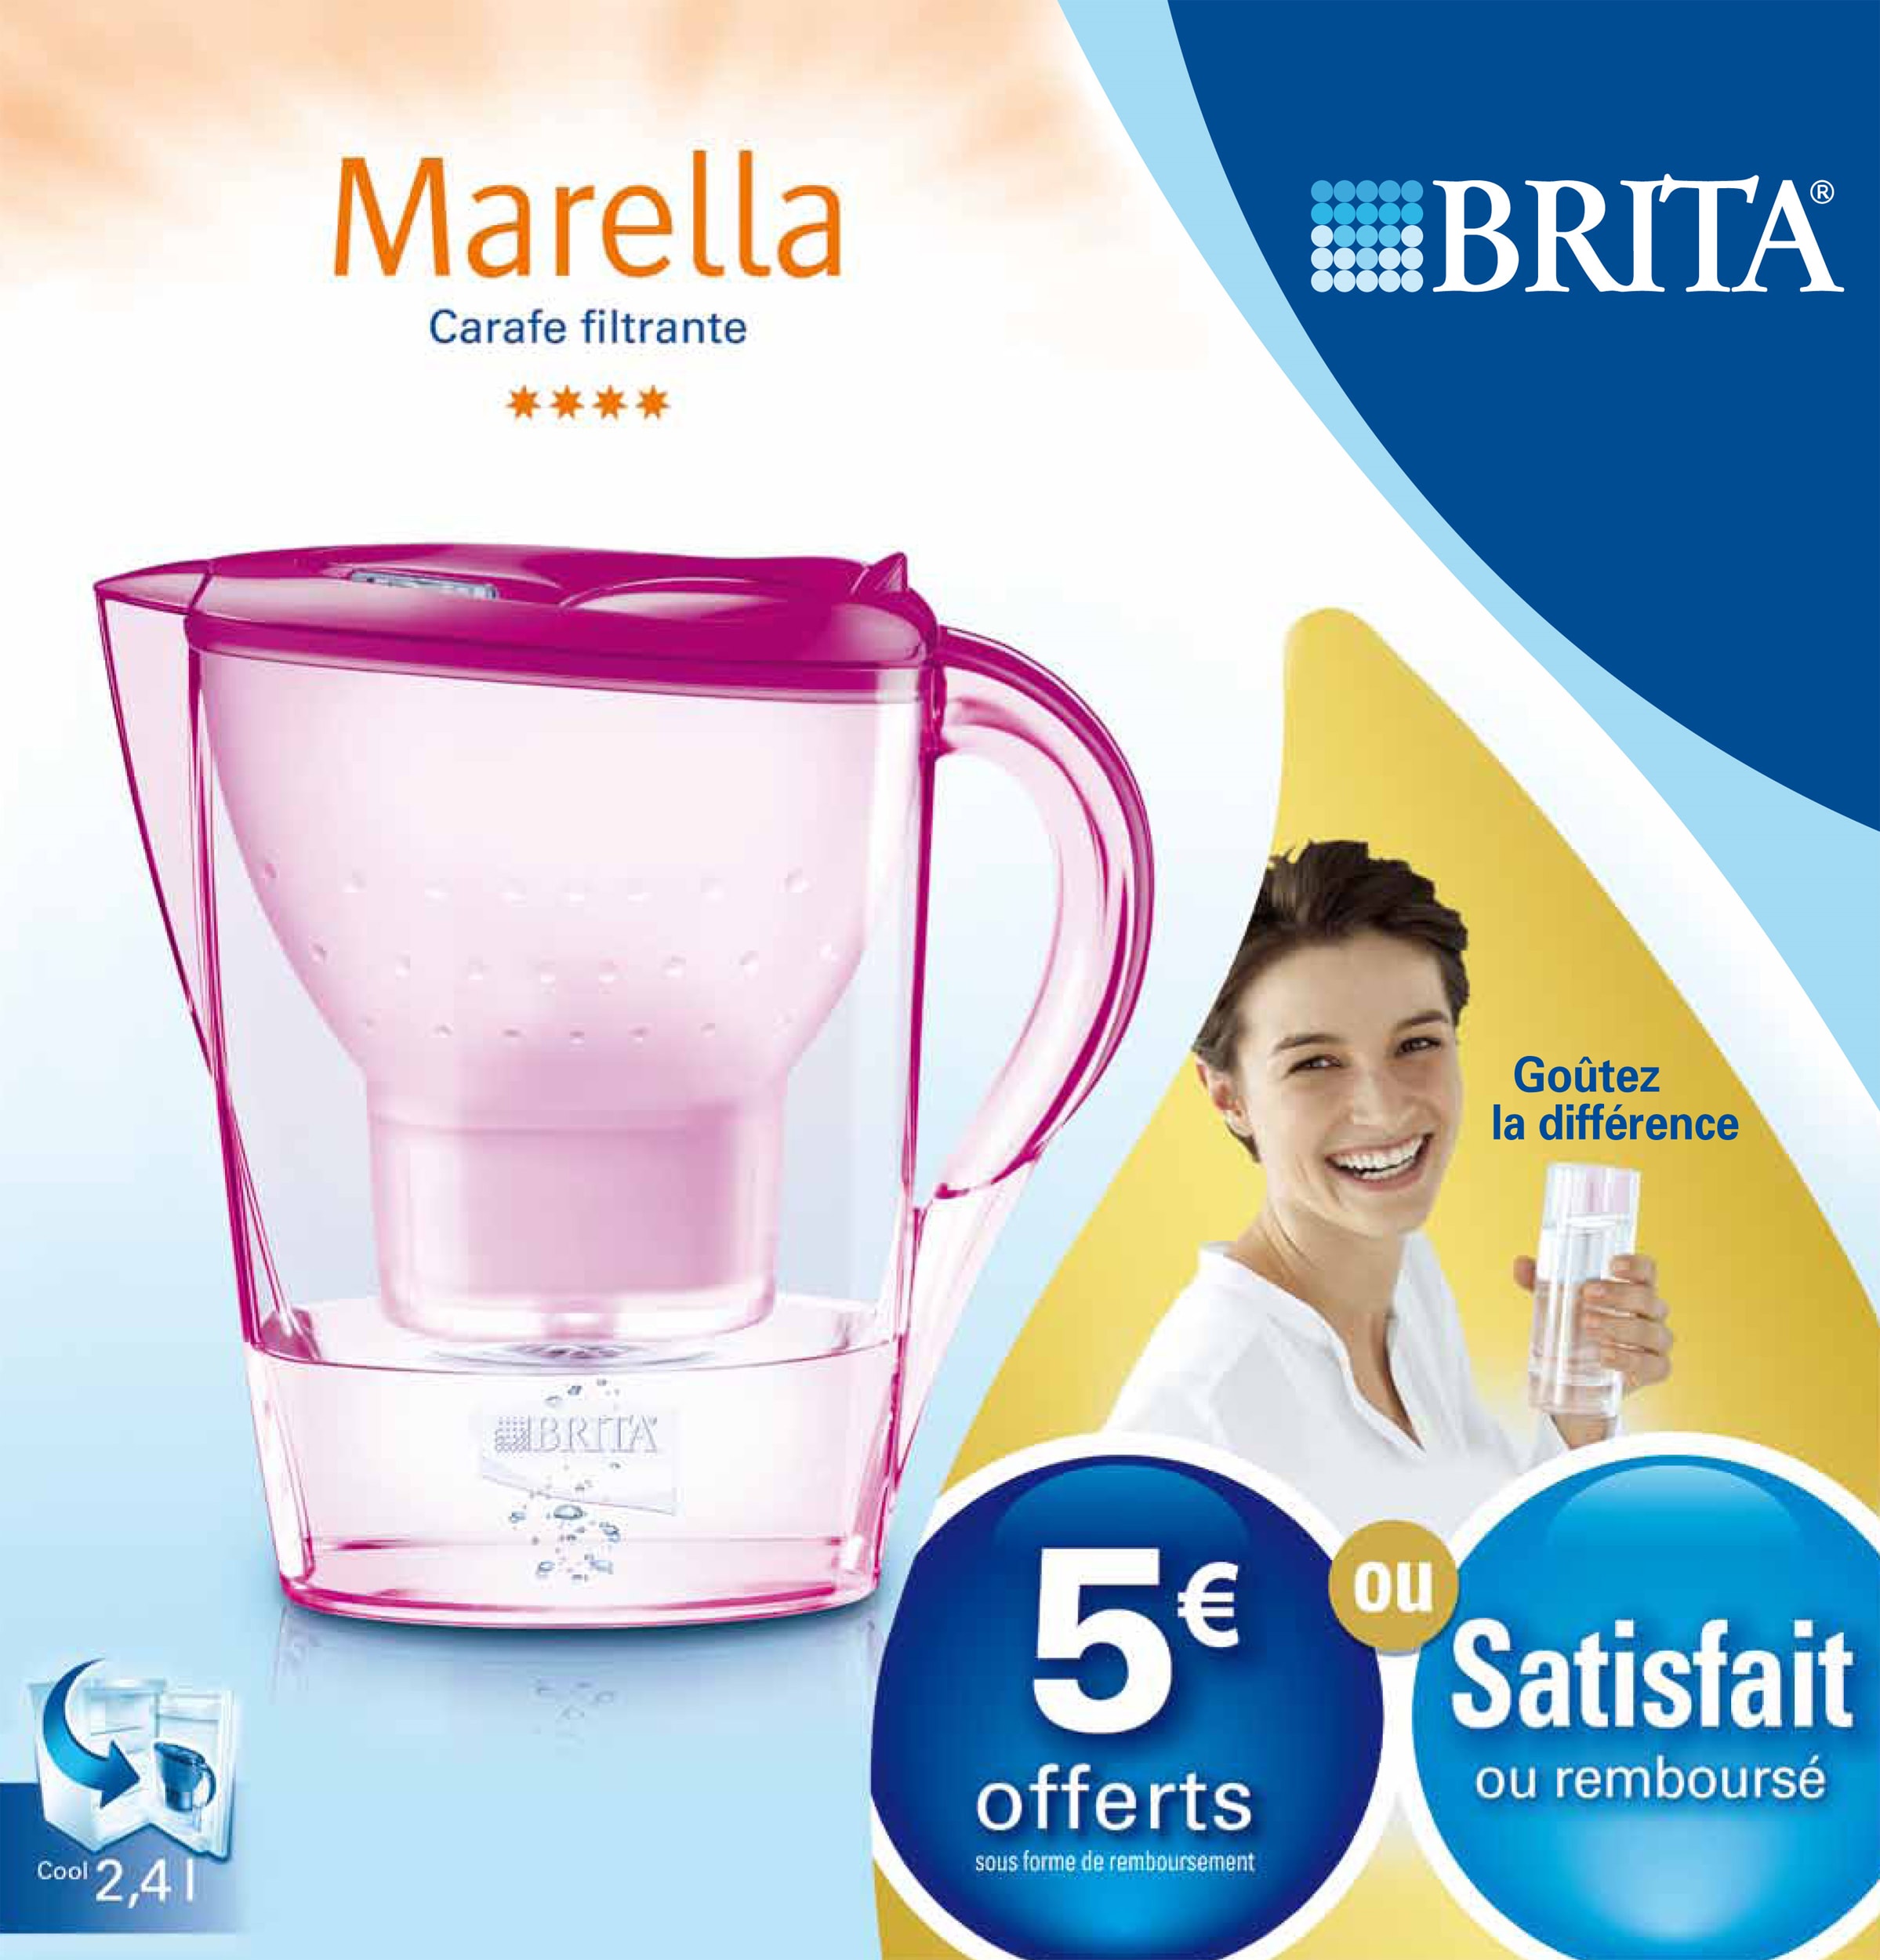 Carafe filtrante BRITA MARELLA - Commerces - Appareil electroménager 